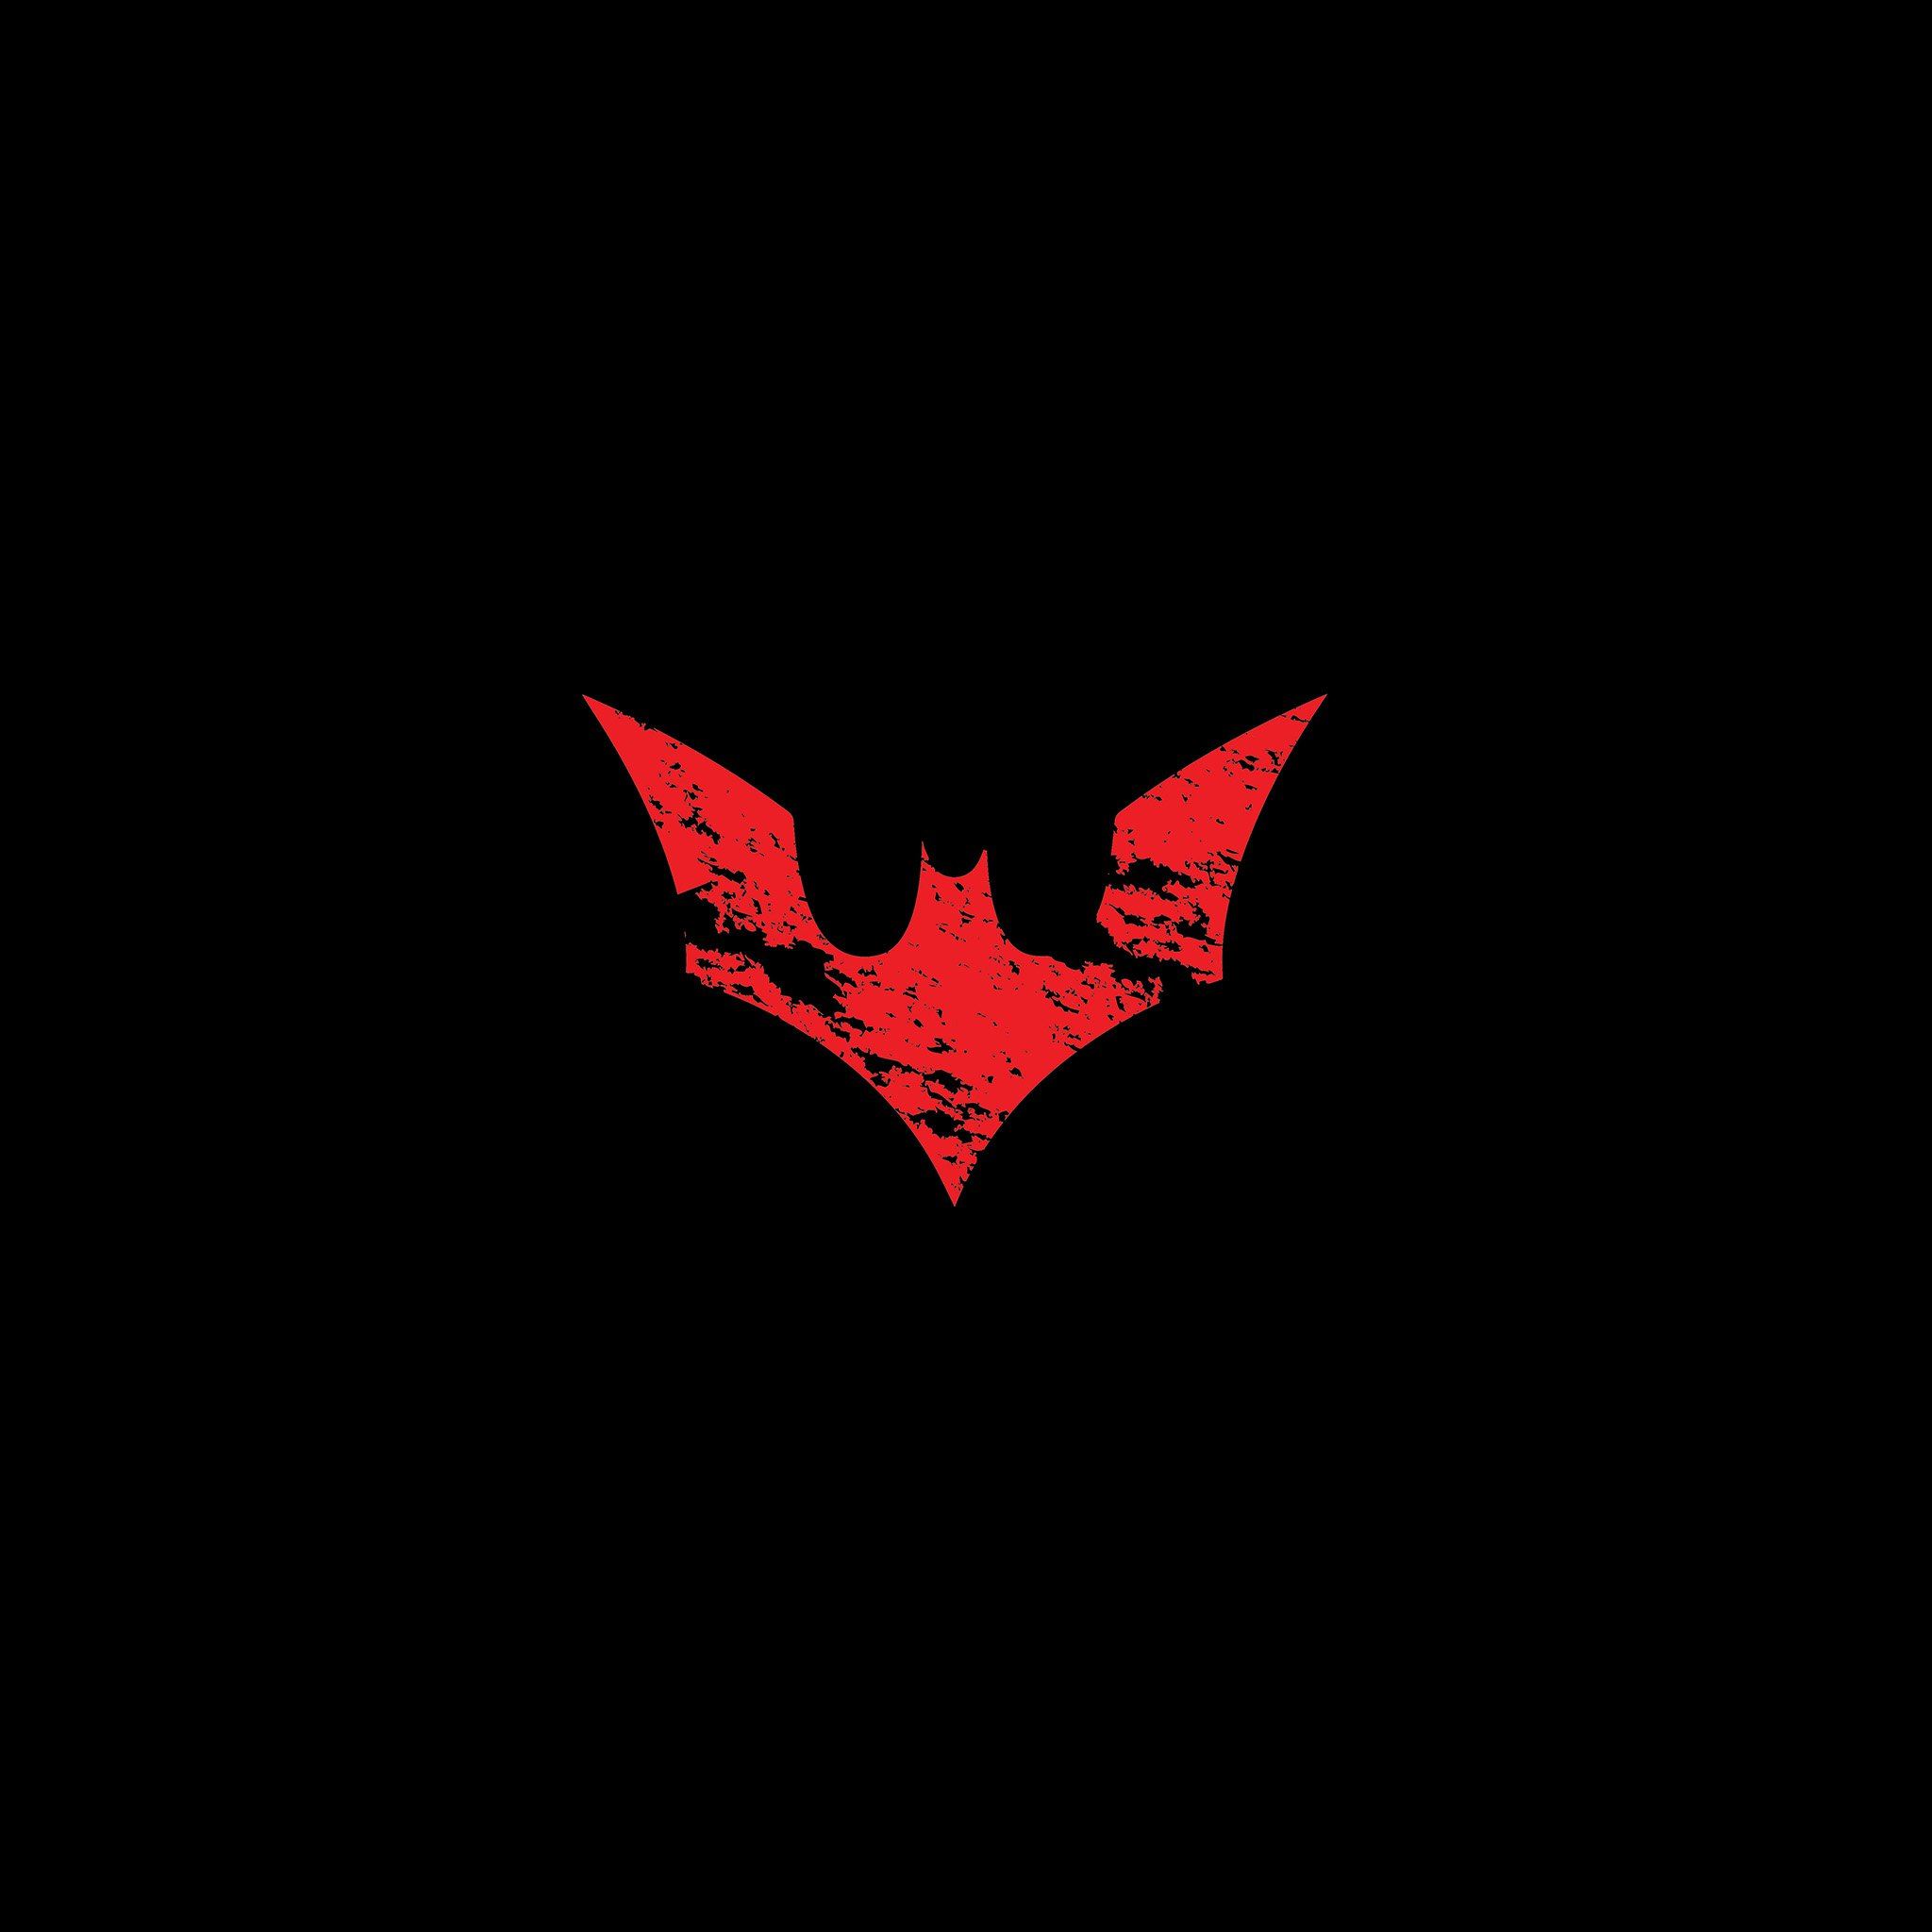 batman logo pop art